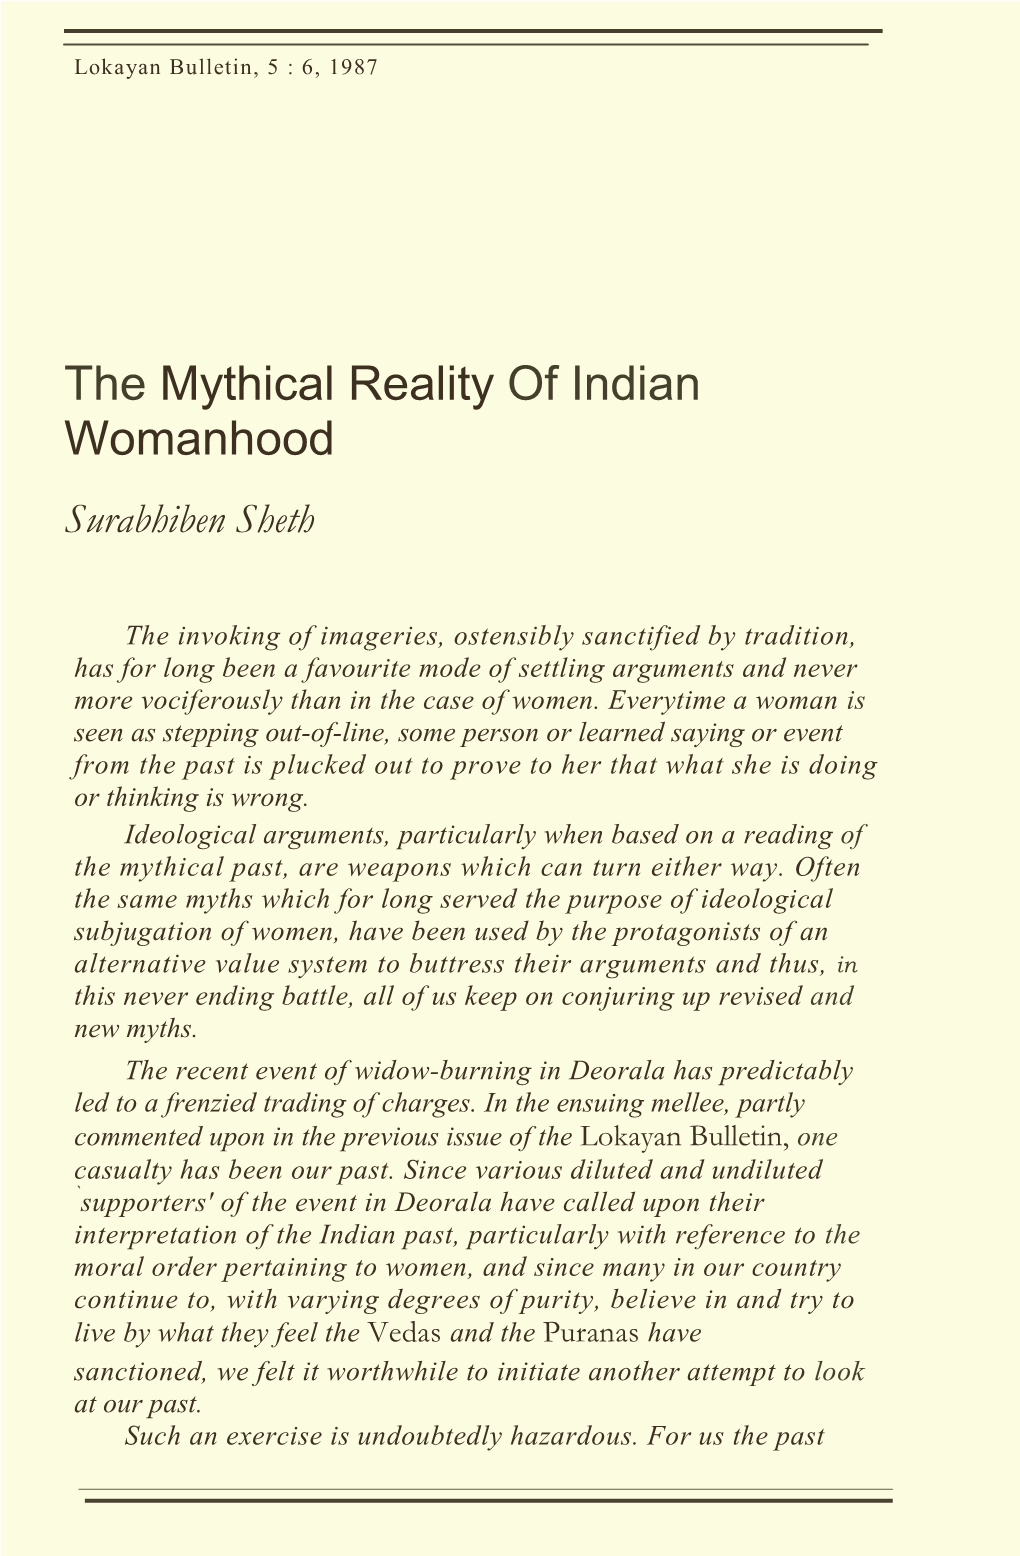 The Mythical Reality of Indian Womanhood Surabhiben Sheth